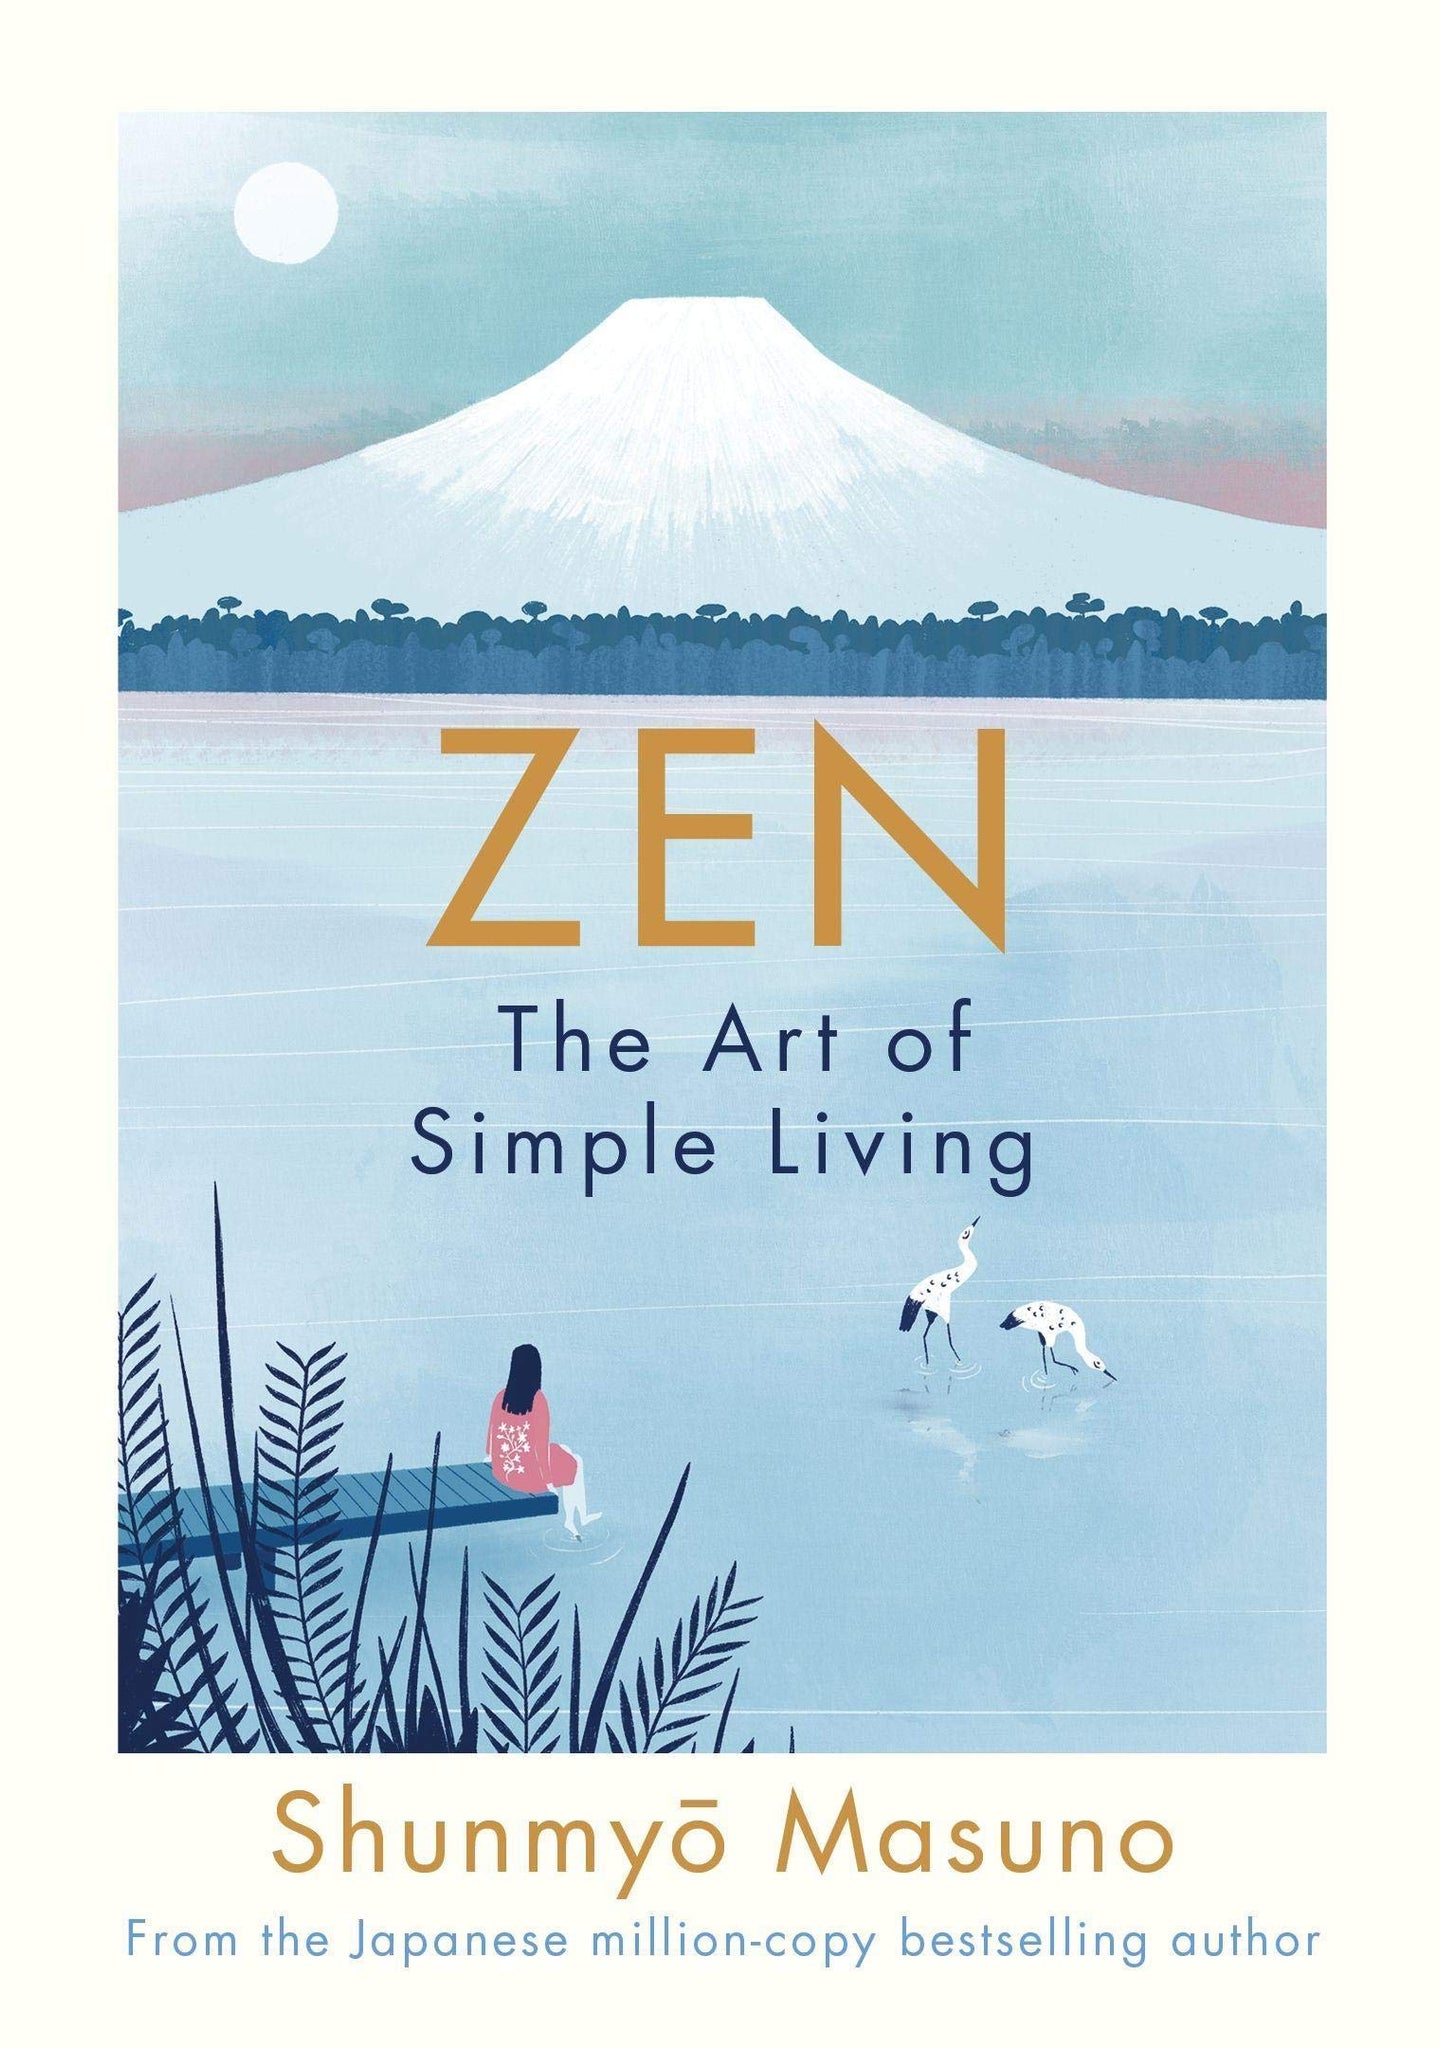 Zen: The Art of Simple Living by Shunmyō Masuno